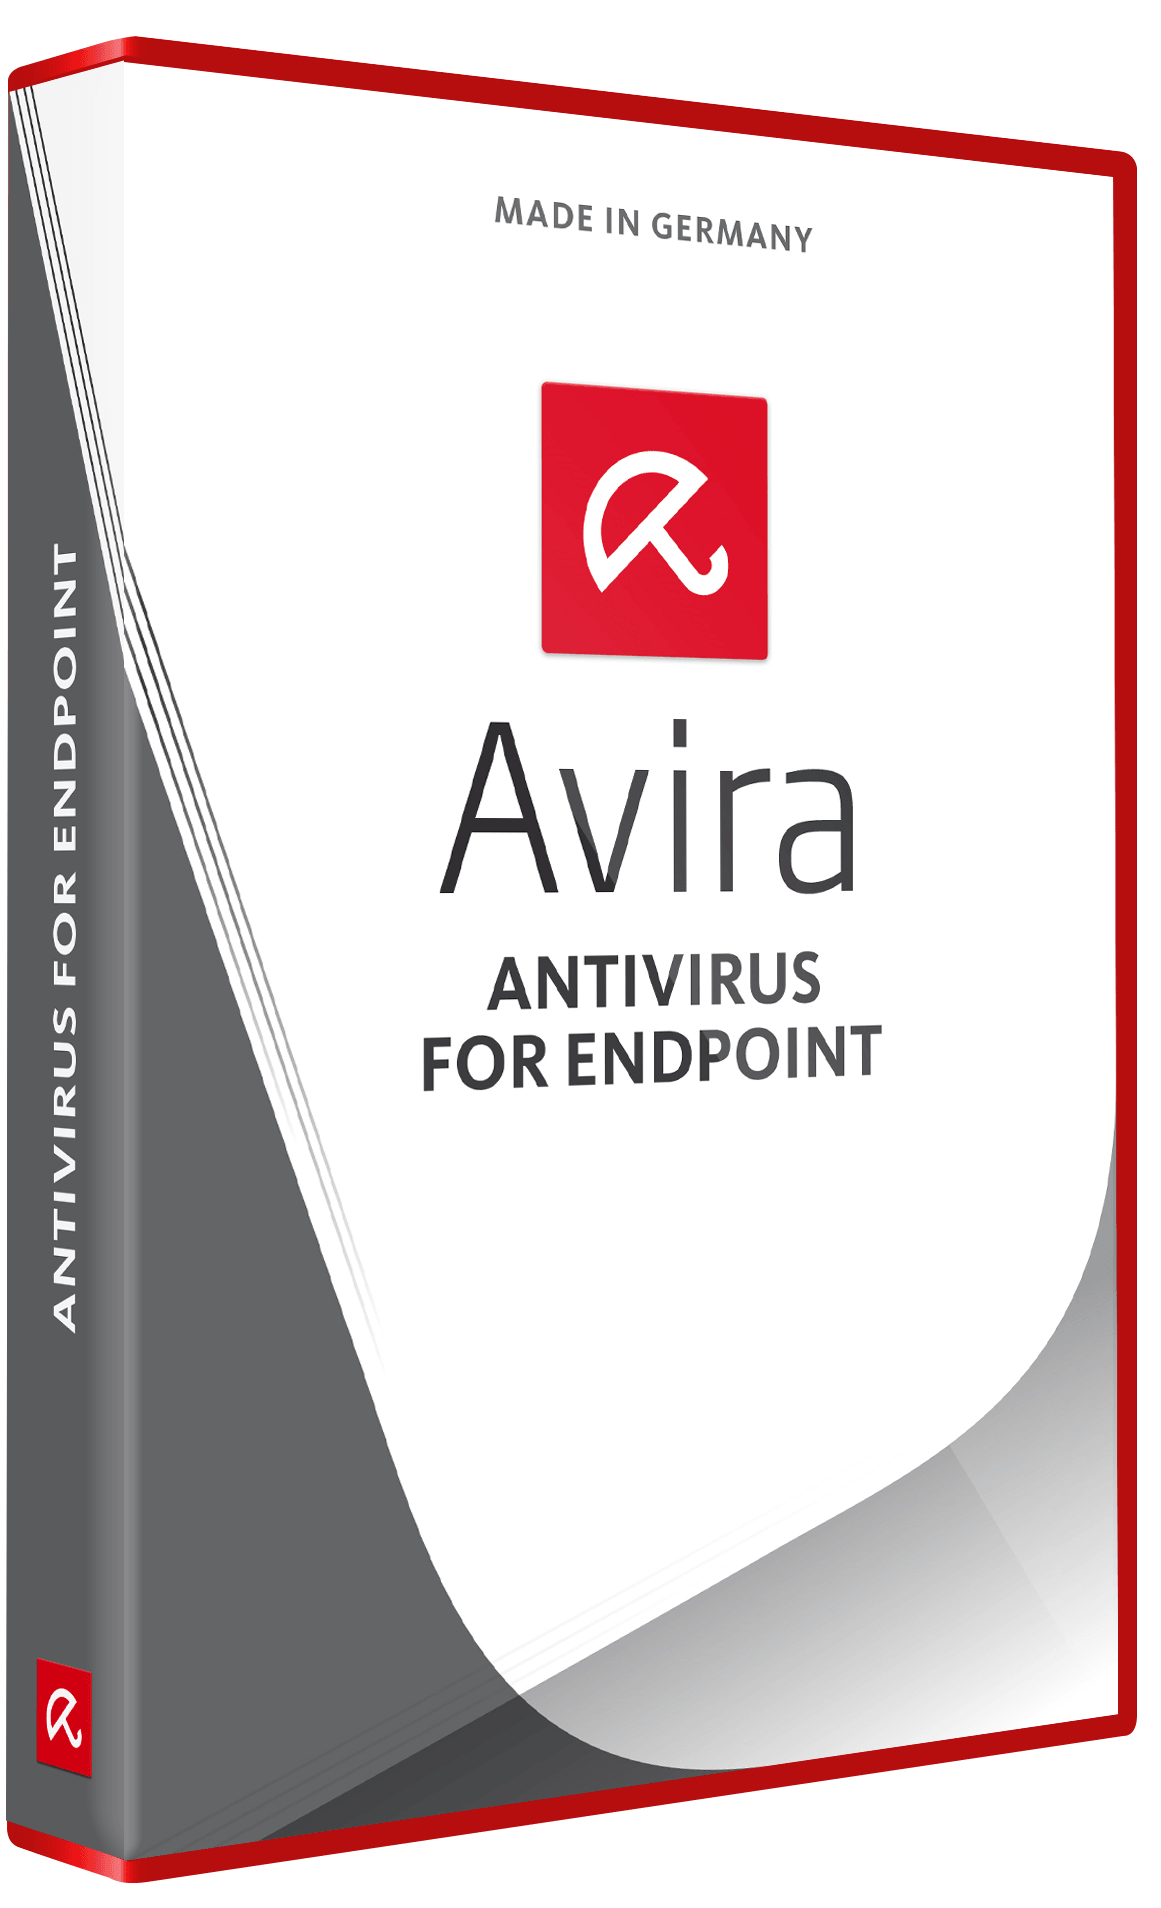 Avira Antivirus for Endpoint 12 месяцев 87 узлов сети